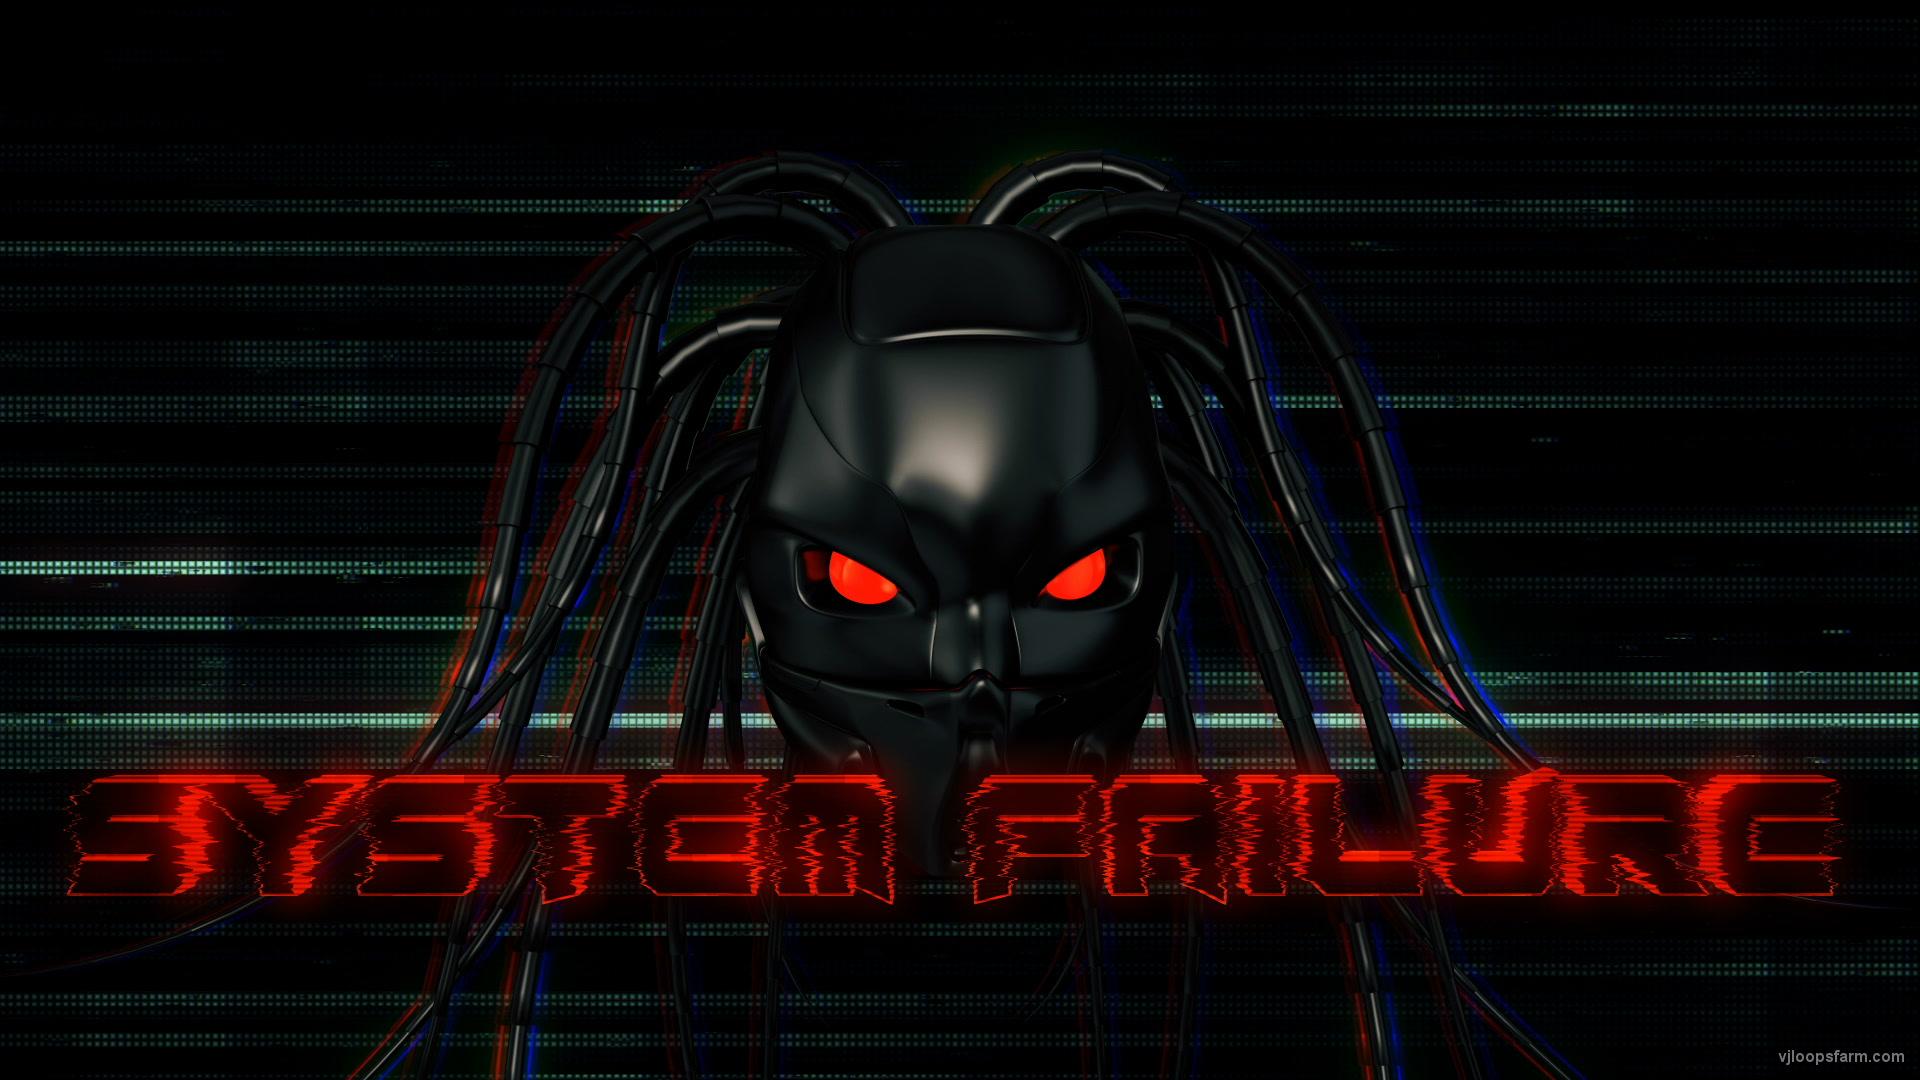 Black Flying Cyborg Head Red Futuristic Sign System Failure Full HD VJ Loop. Download at VJ Loops Farm